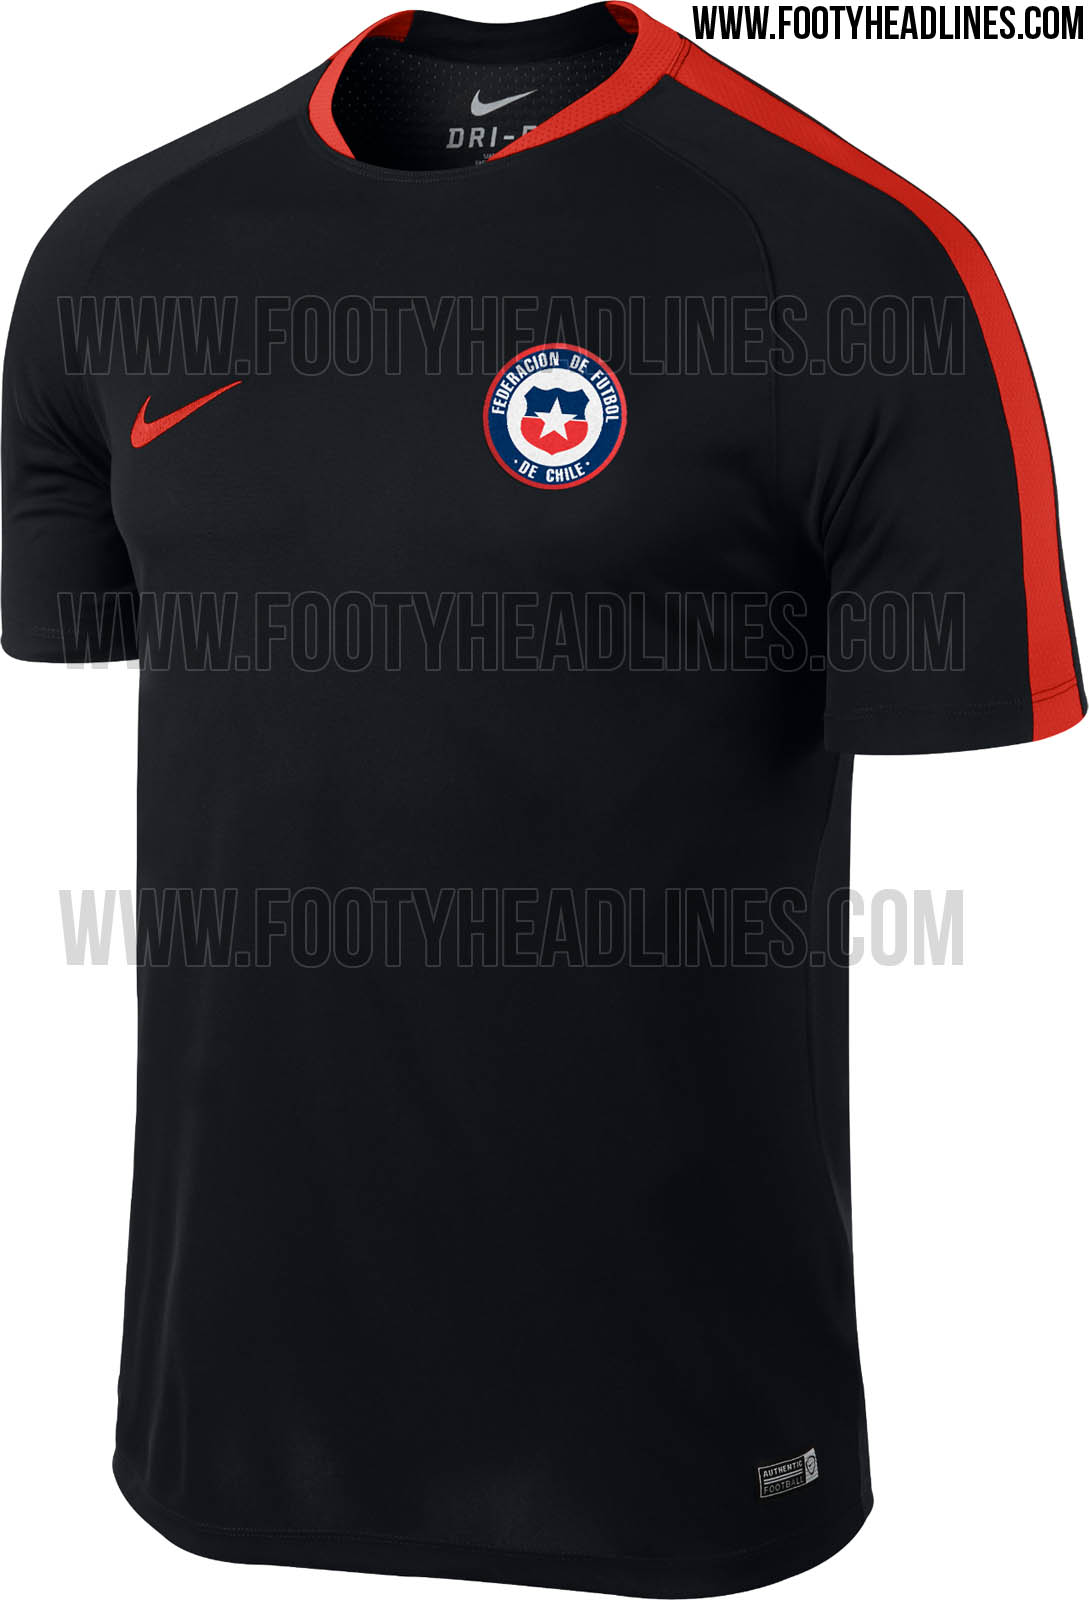 Nike Chile 2015-16 Training Kits Leaked - Footy Headlines